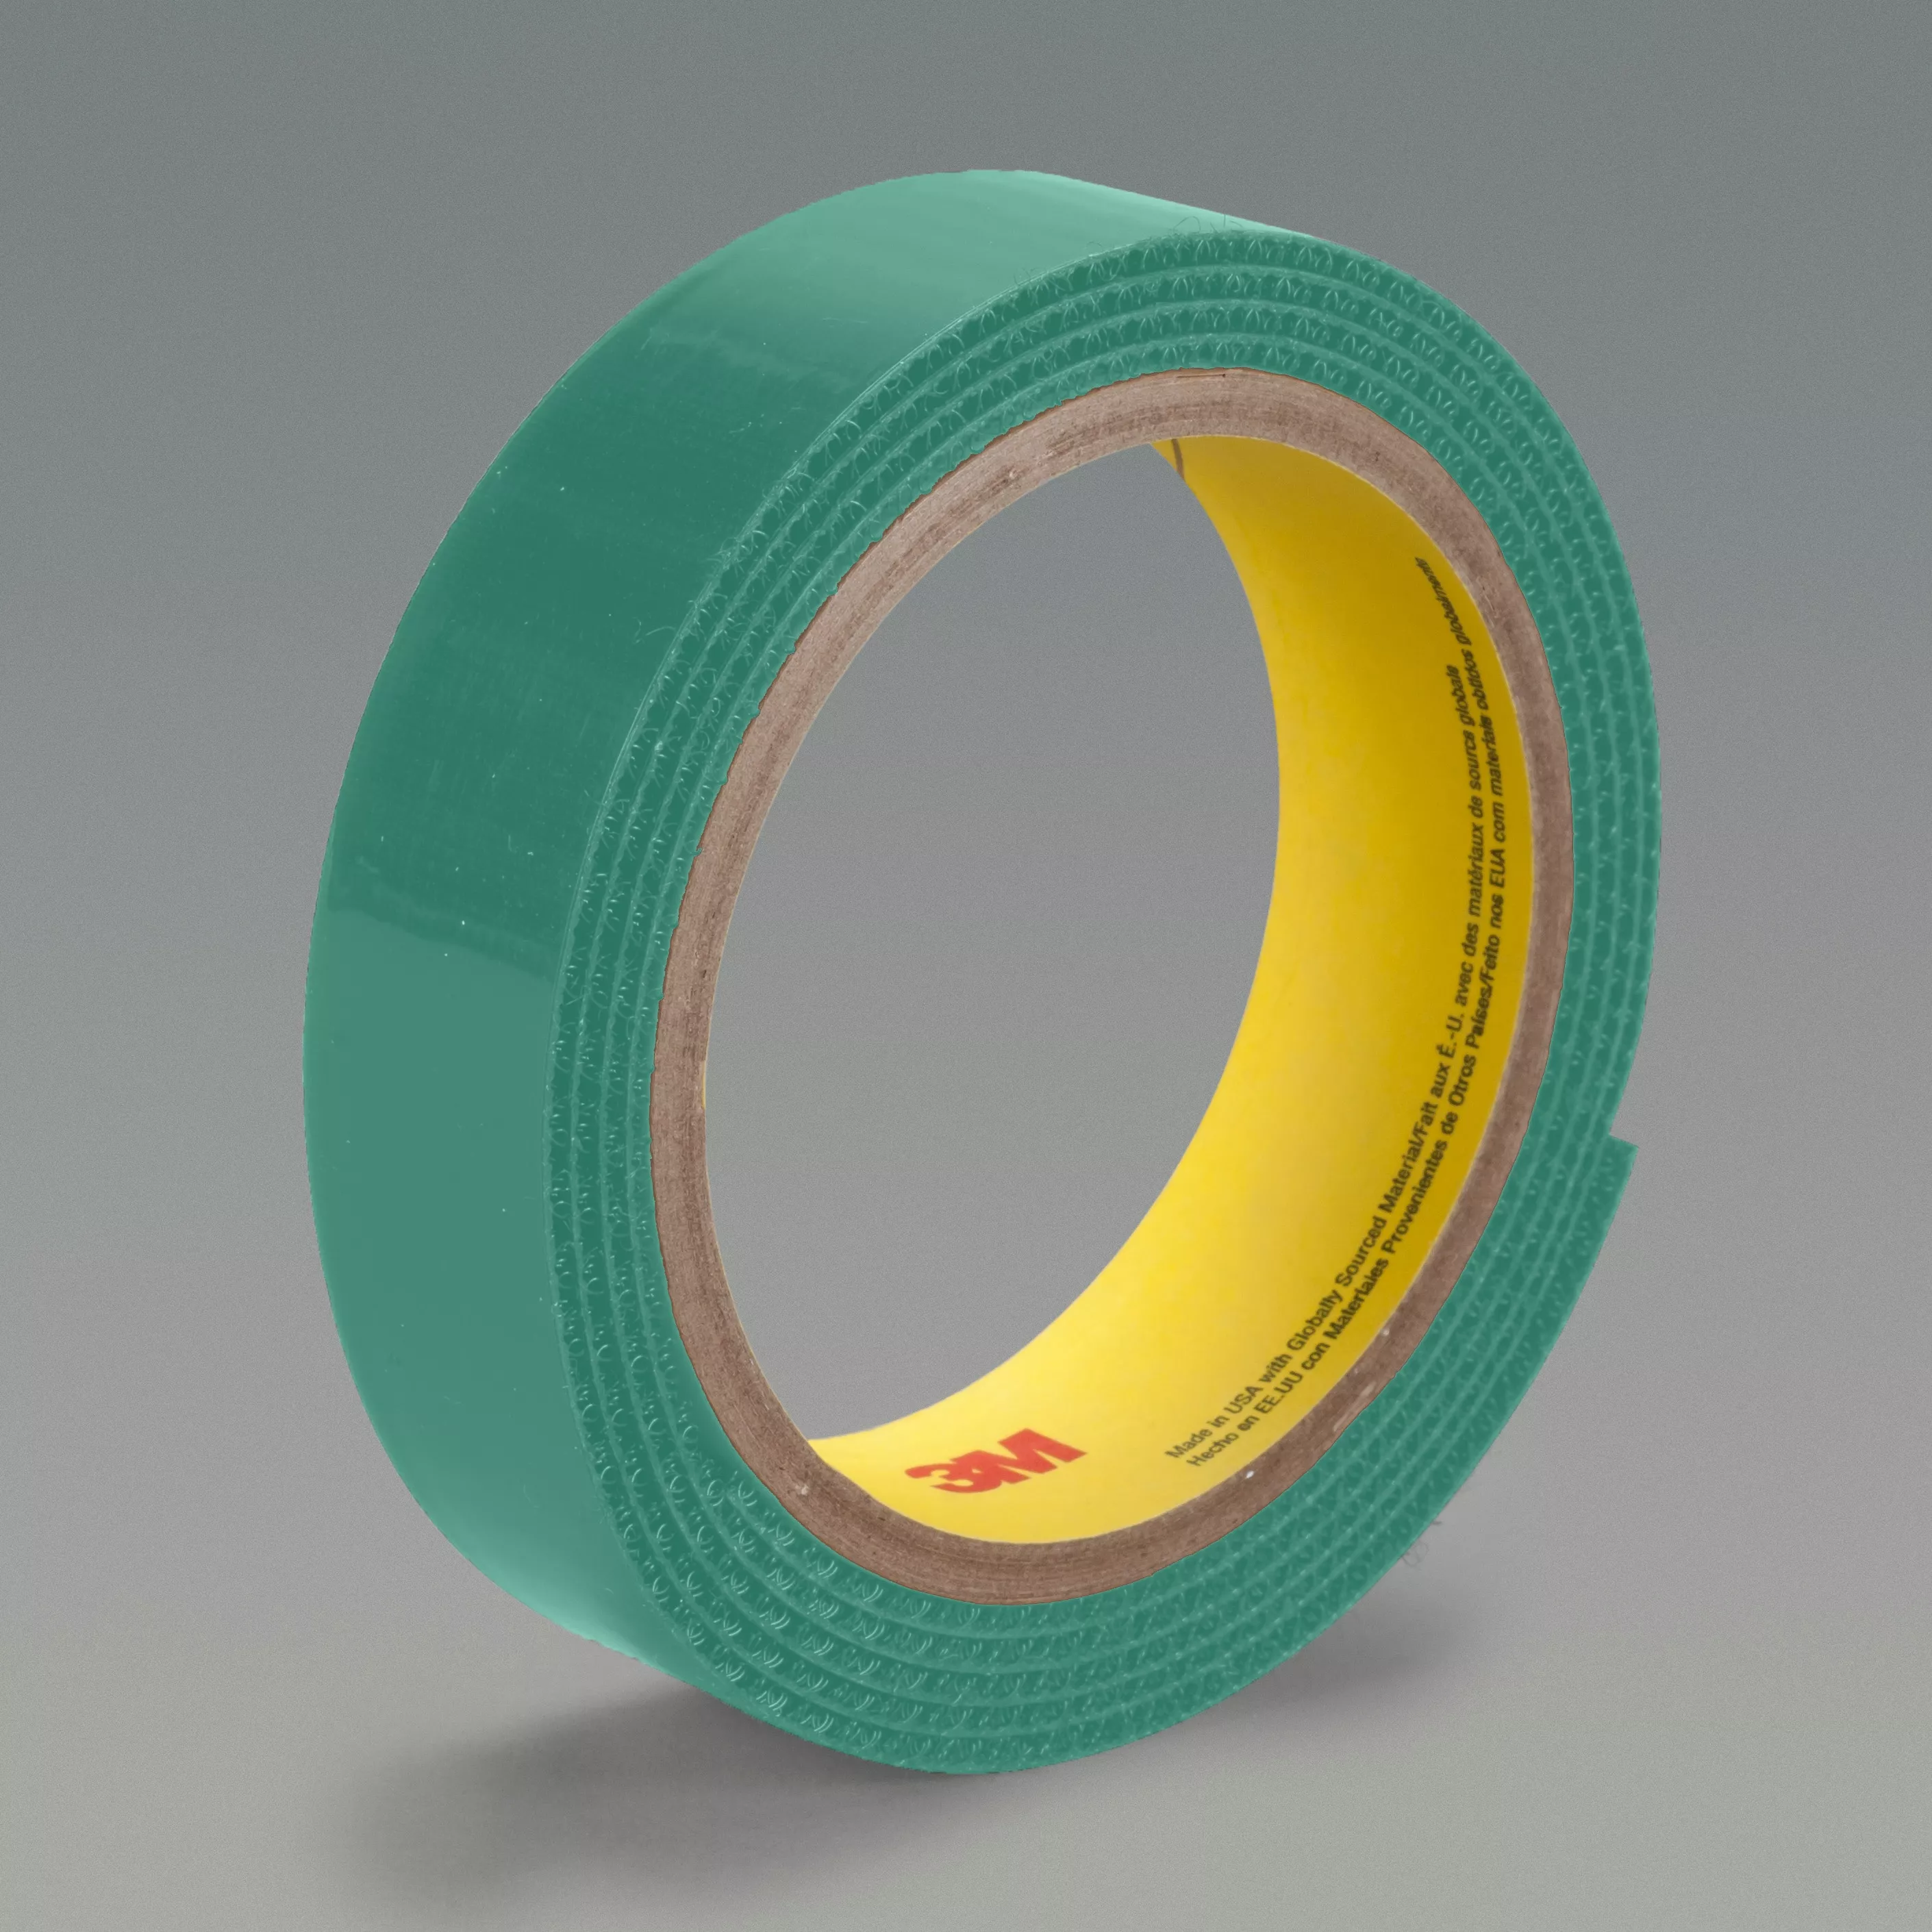 3M™ Loop Fastener SJ3401, Emerald Green, 1 in x 50 yd, 12 rolls per case